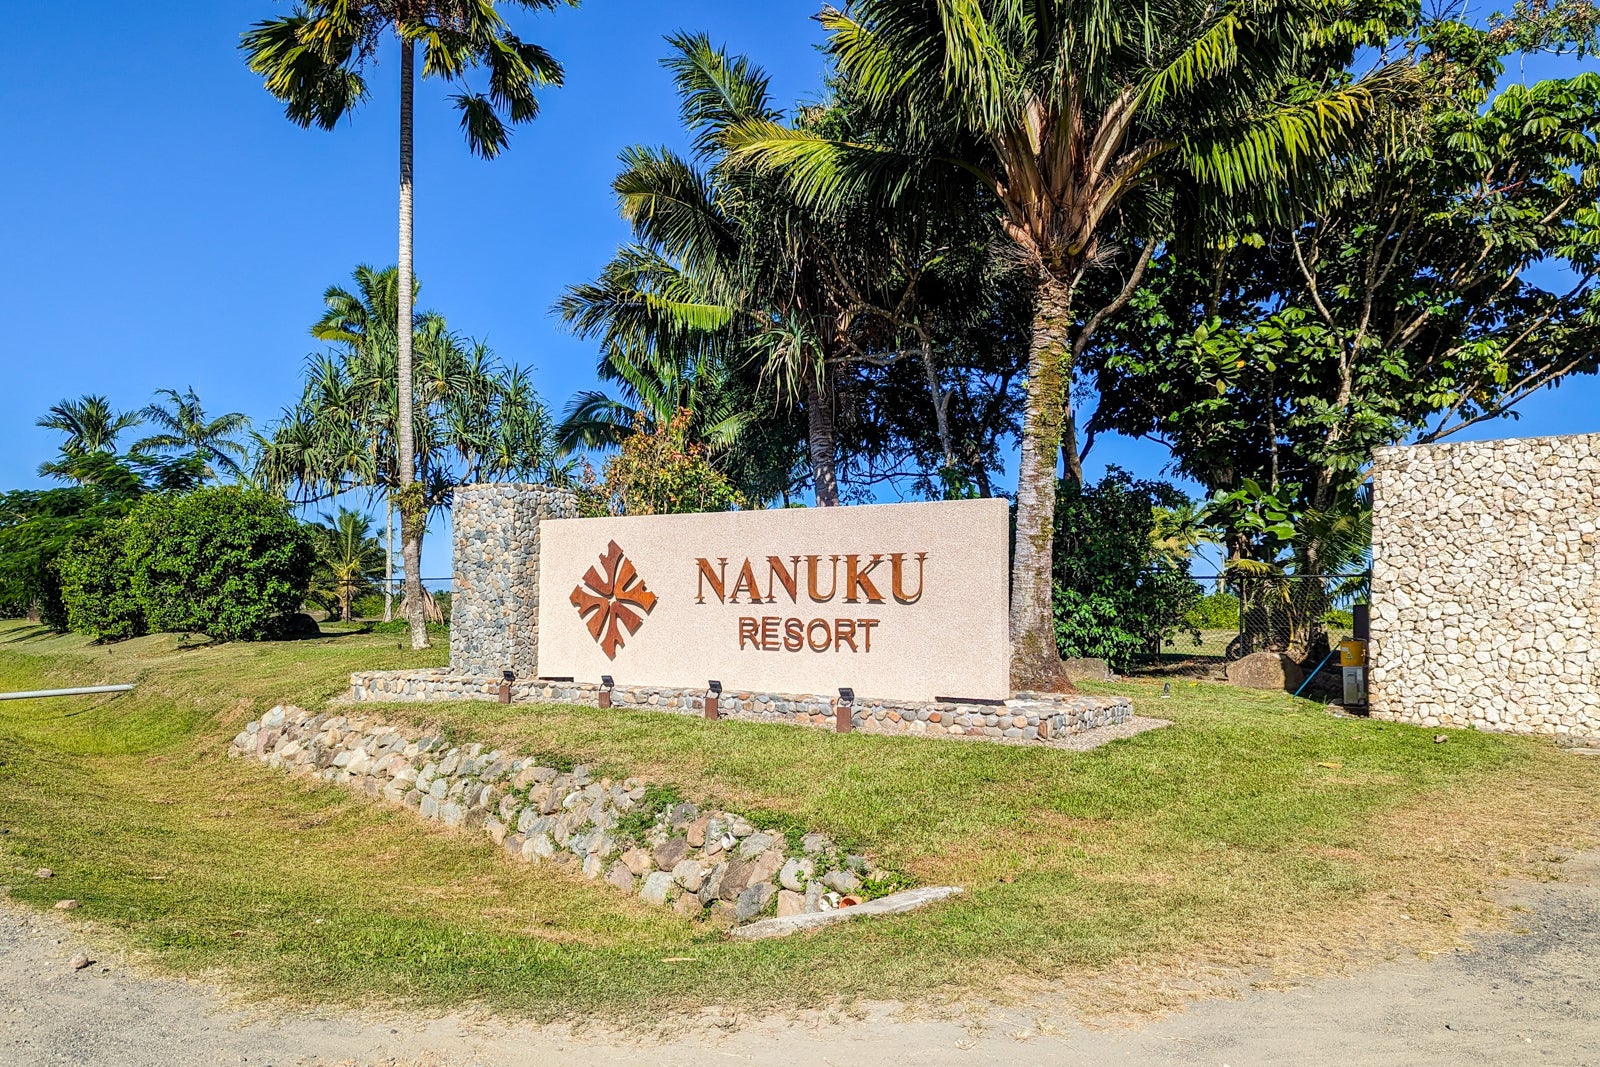 Nanuku Resort Fiji road sign